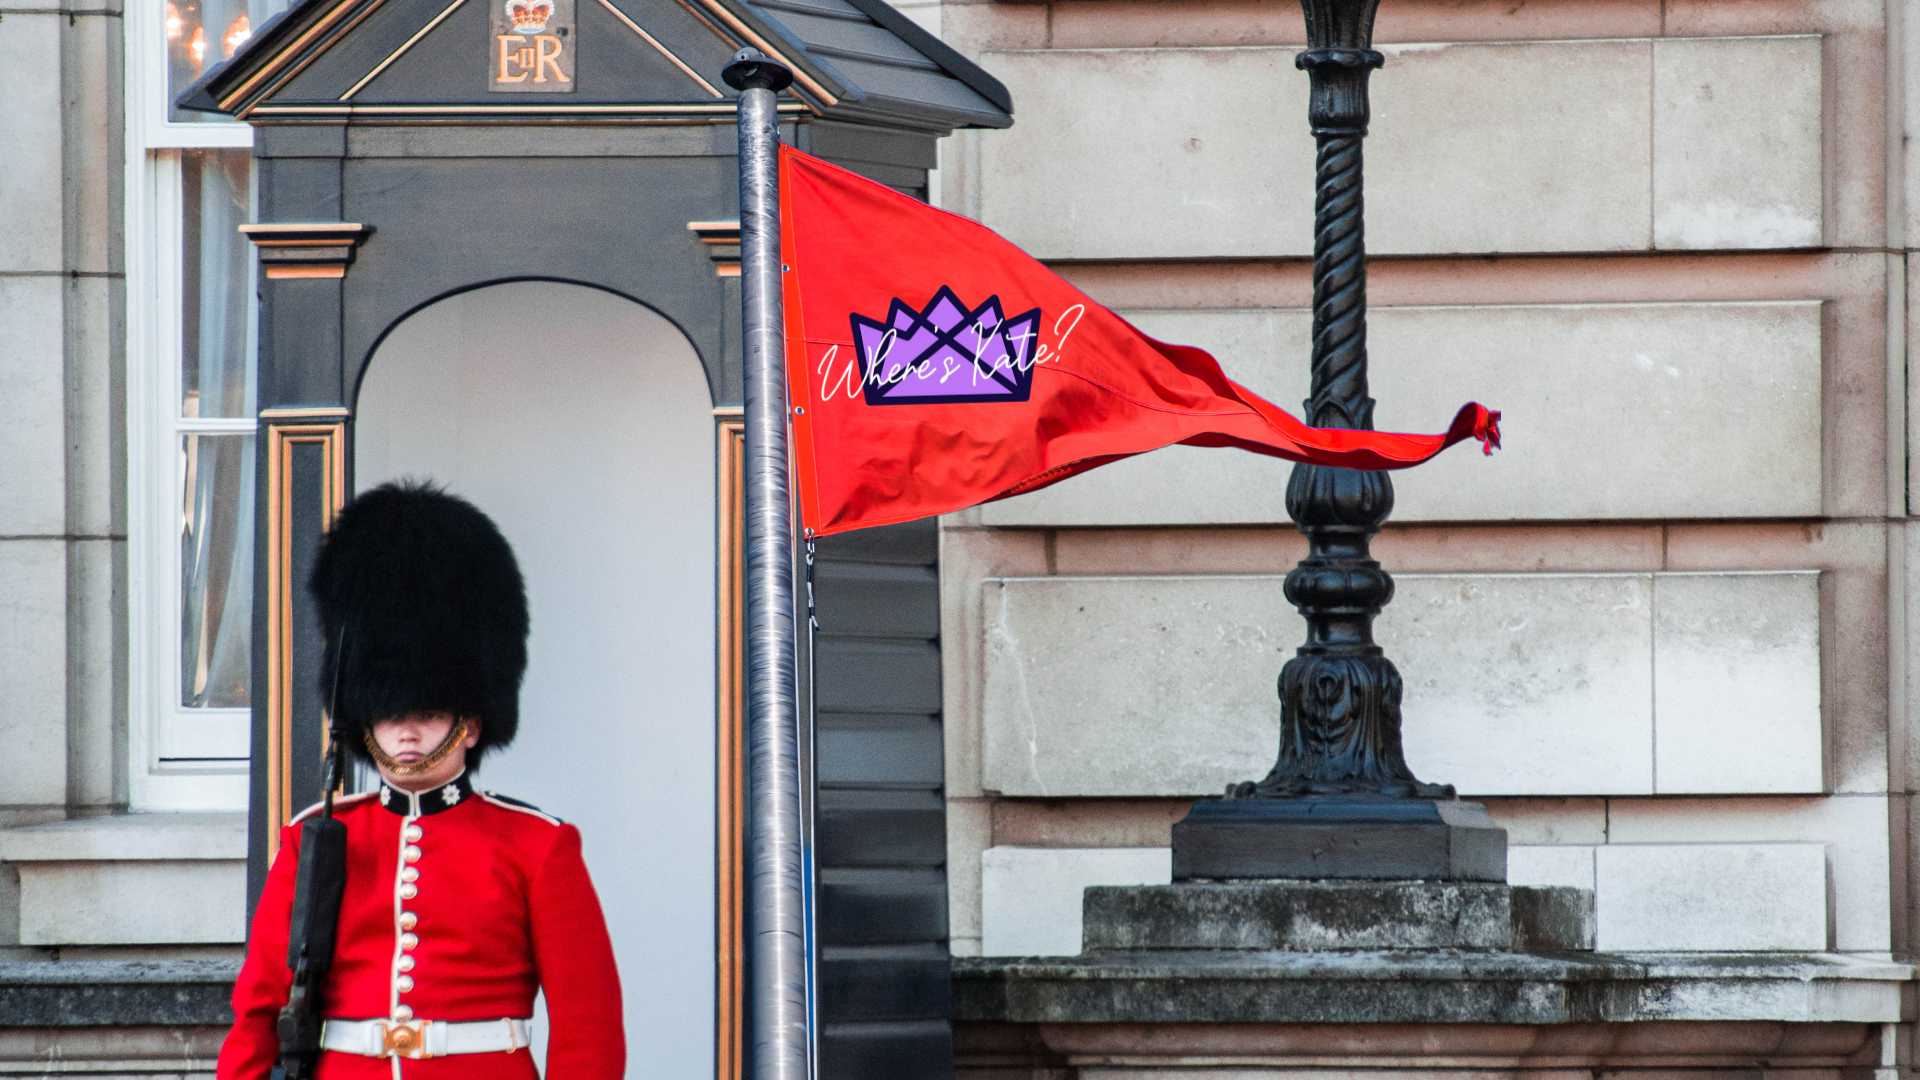 Prince William’s Social Media Return: A Red Flag?